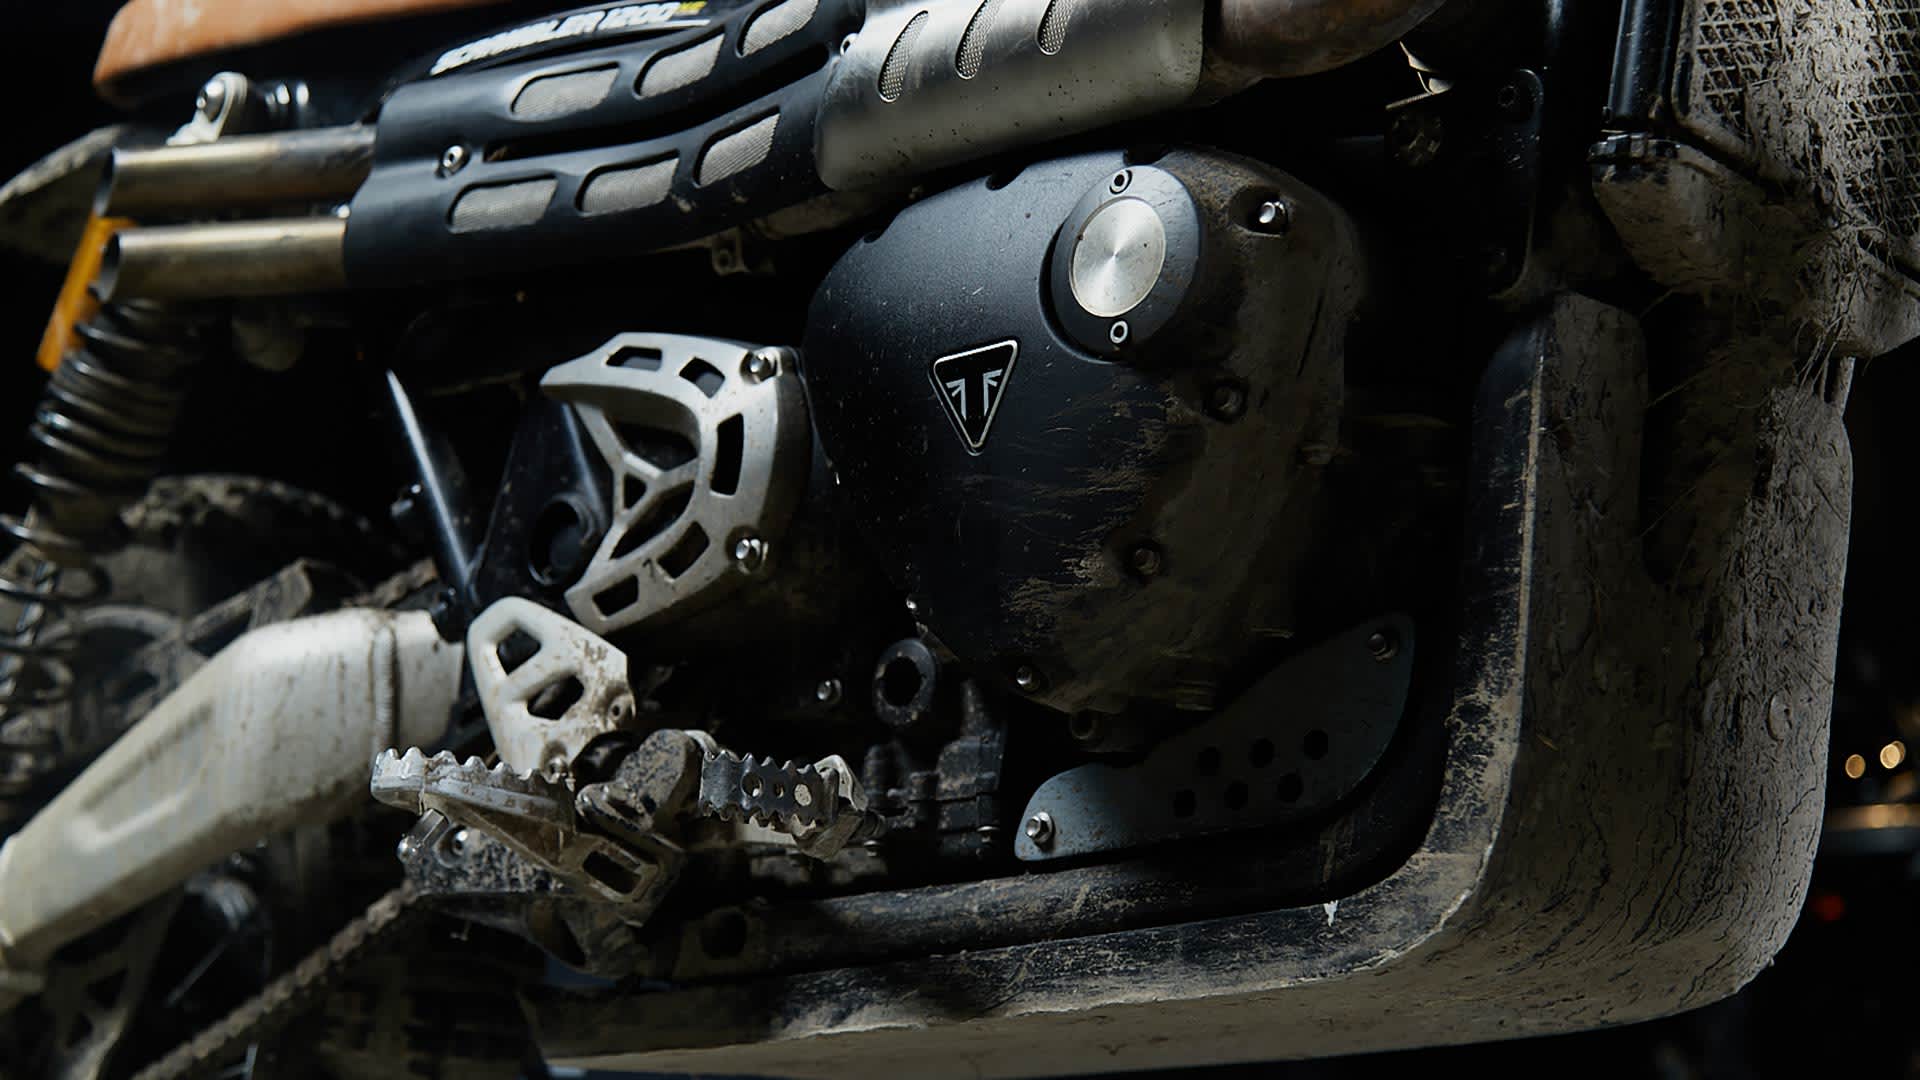 Close up shot of the Scrambler 1200 Bond Movie Bike engine